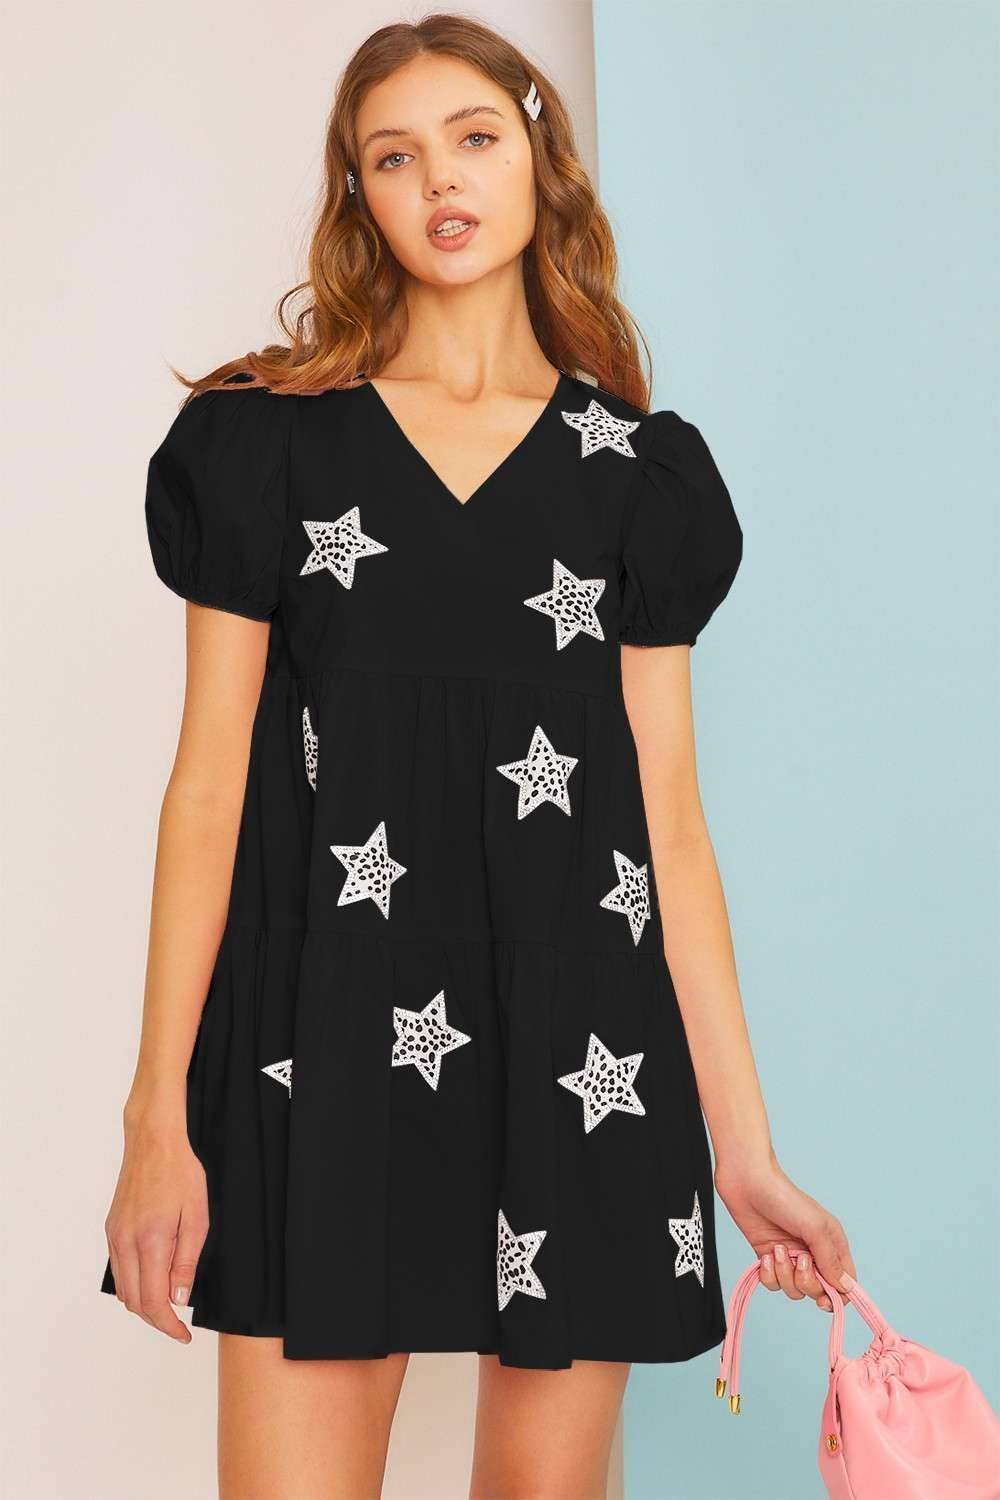 Main Strip - Leopard Star Black Patch Solid Dress